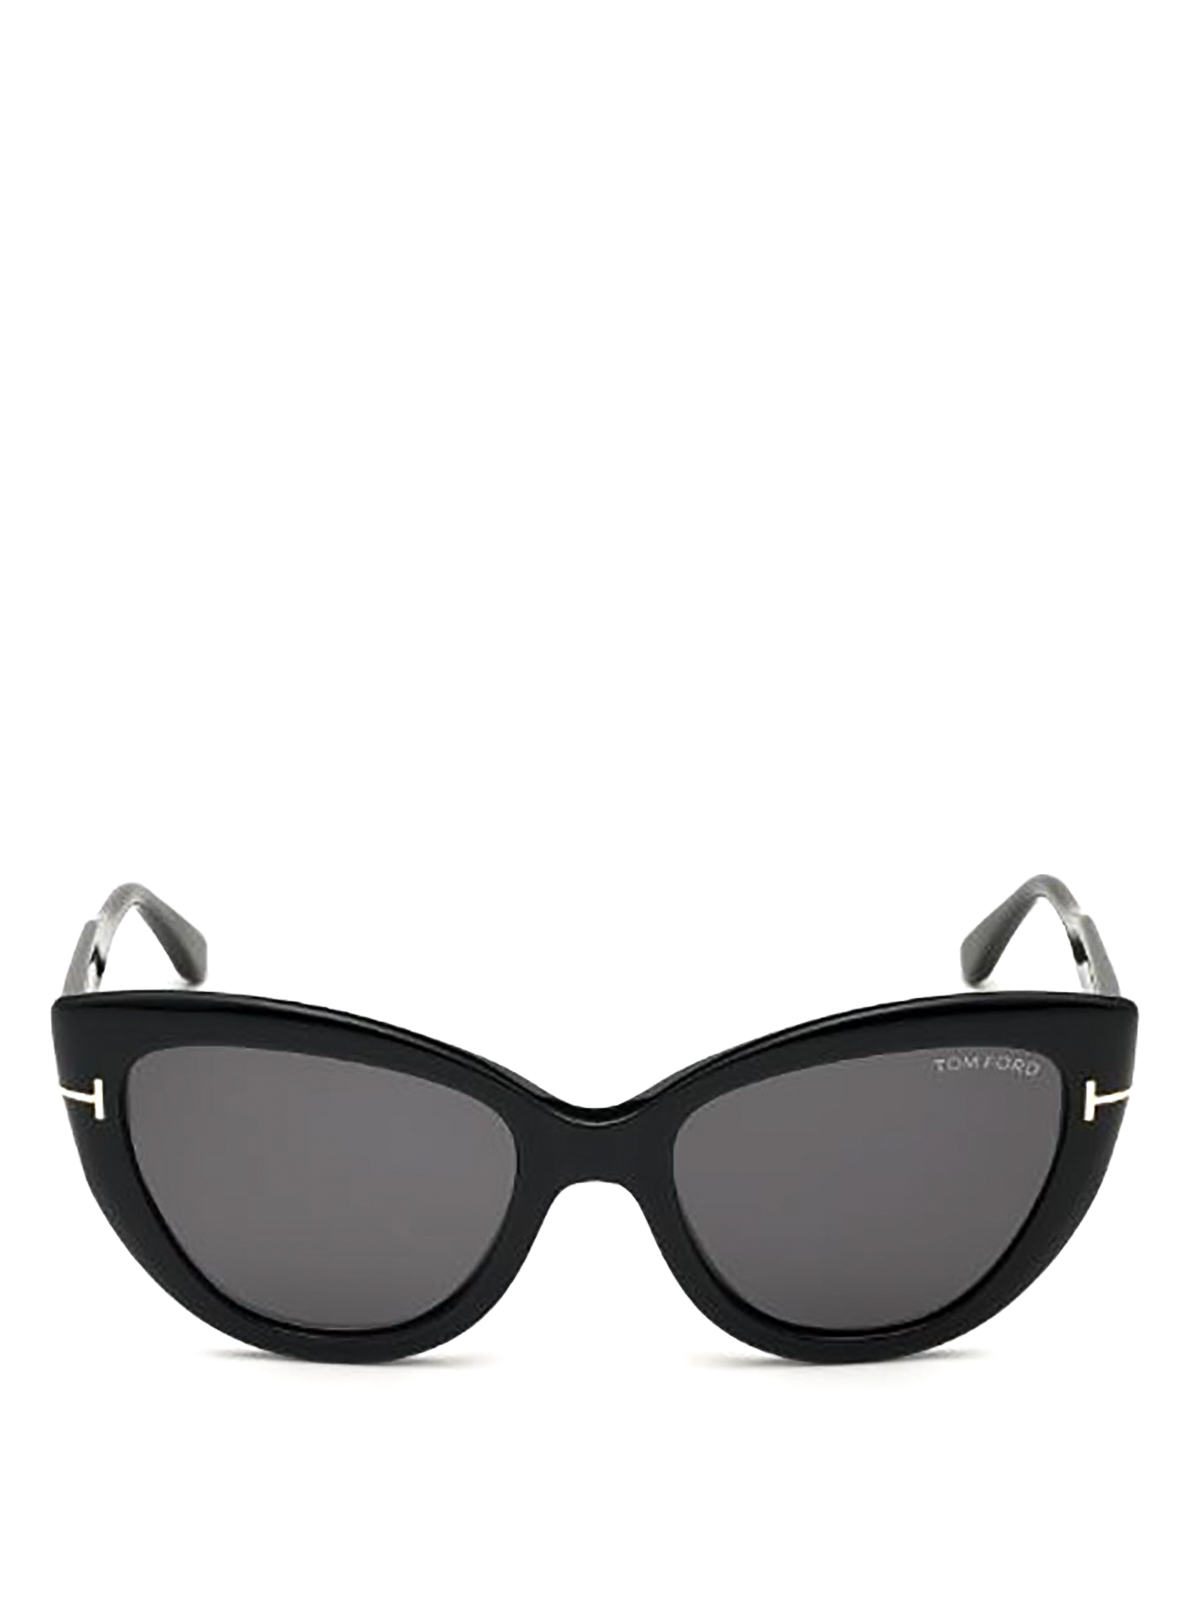 Sunglasses Tom Ford - Polarized Anya sunglasses - FT076201A | iKRIX.com